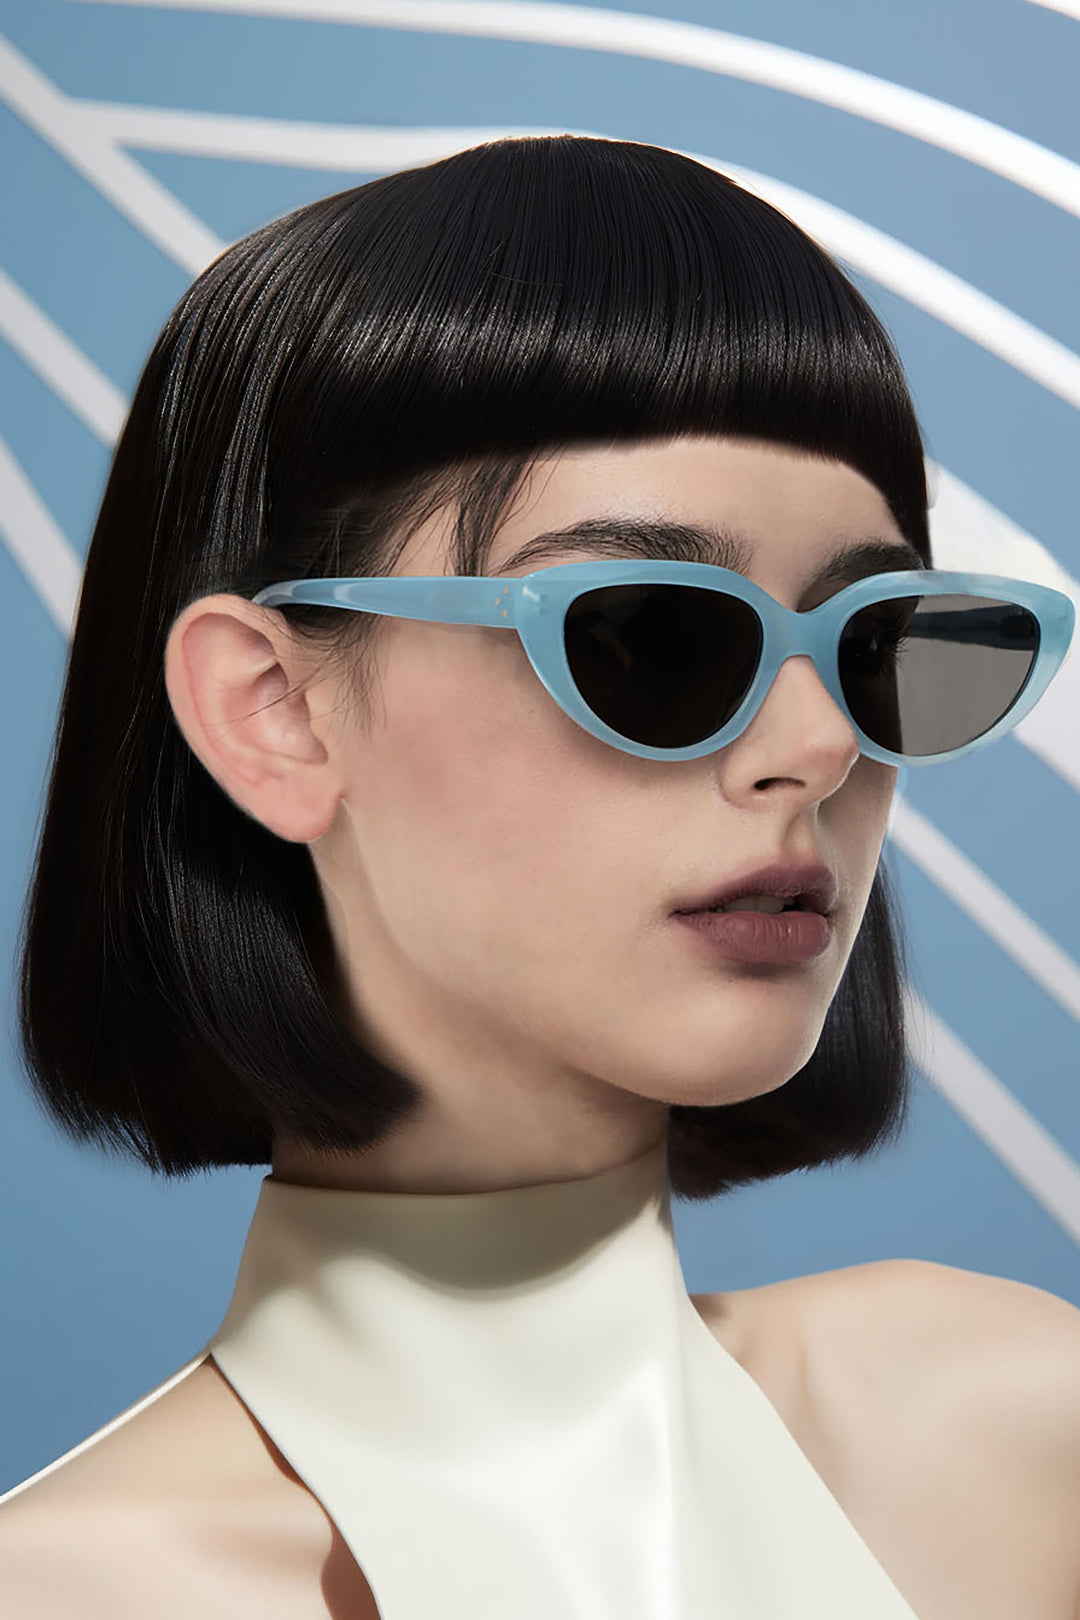 Chic model wearing blue-framed mercury retrograde sunglasses.